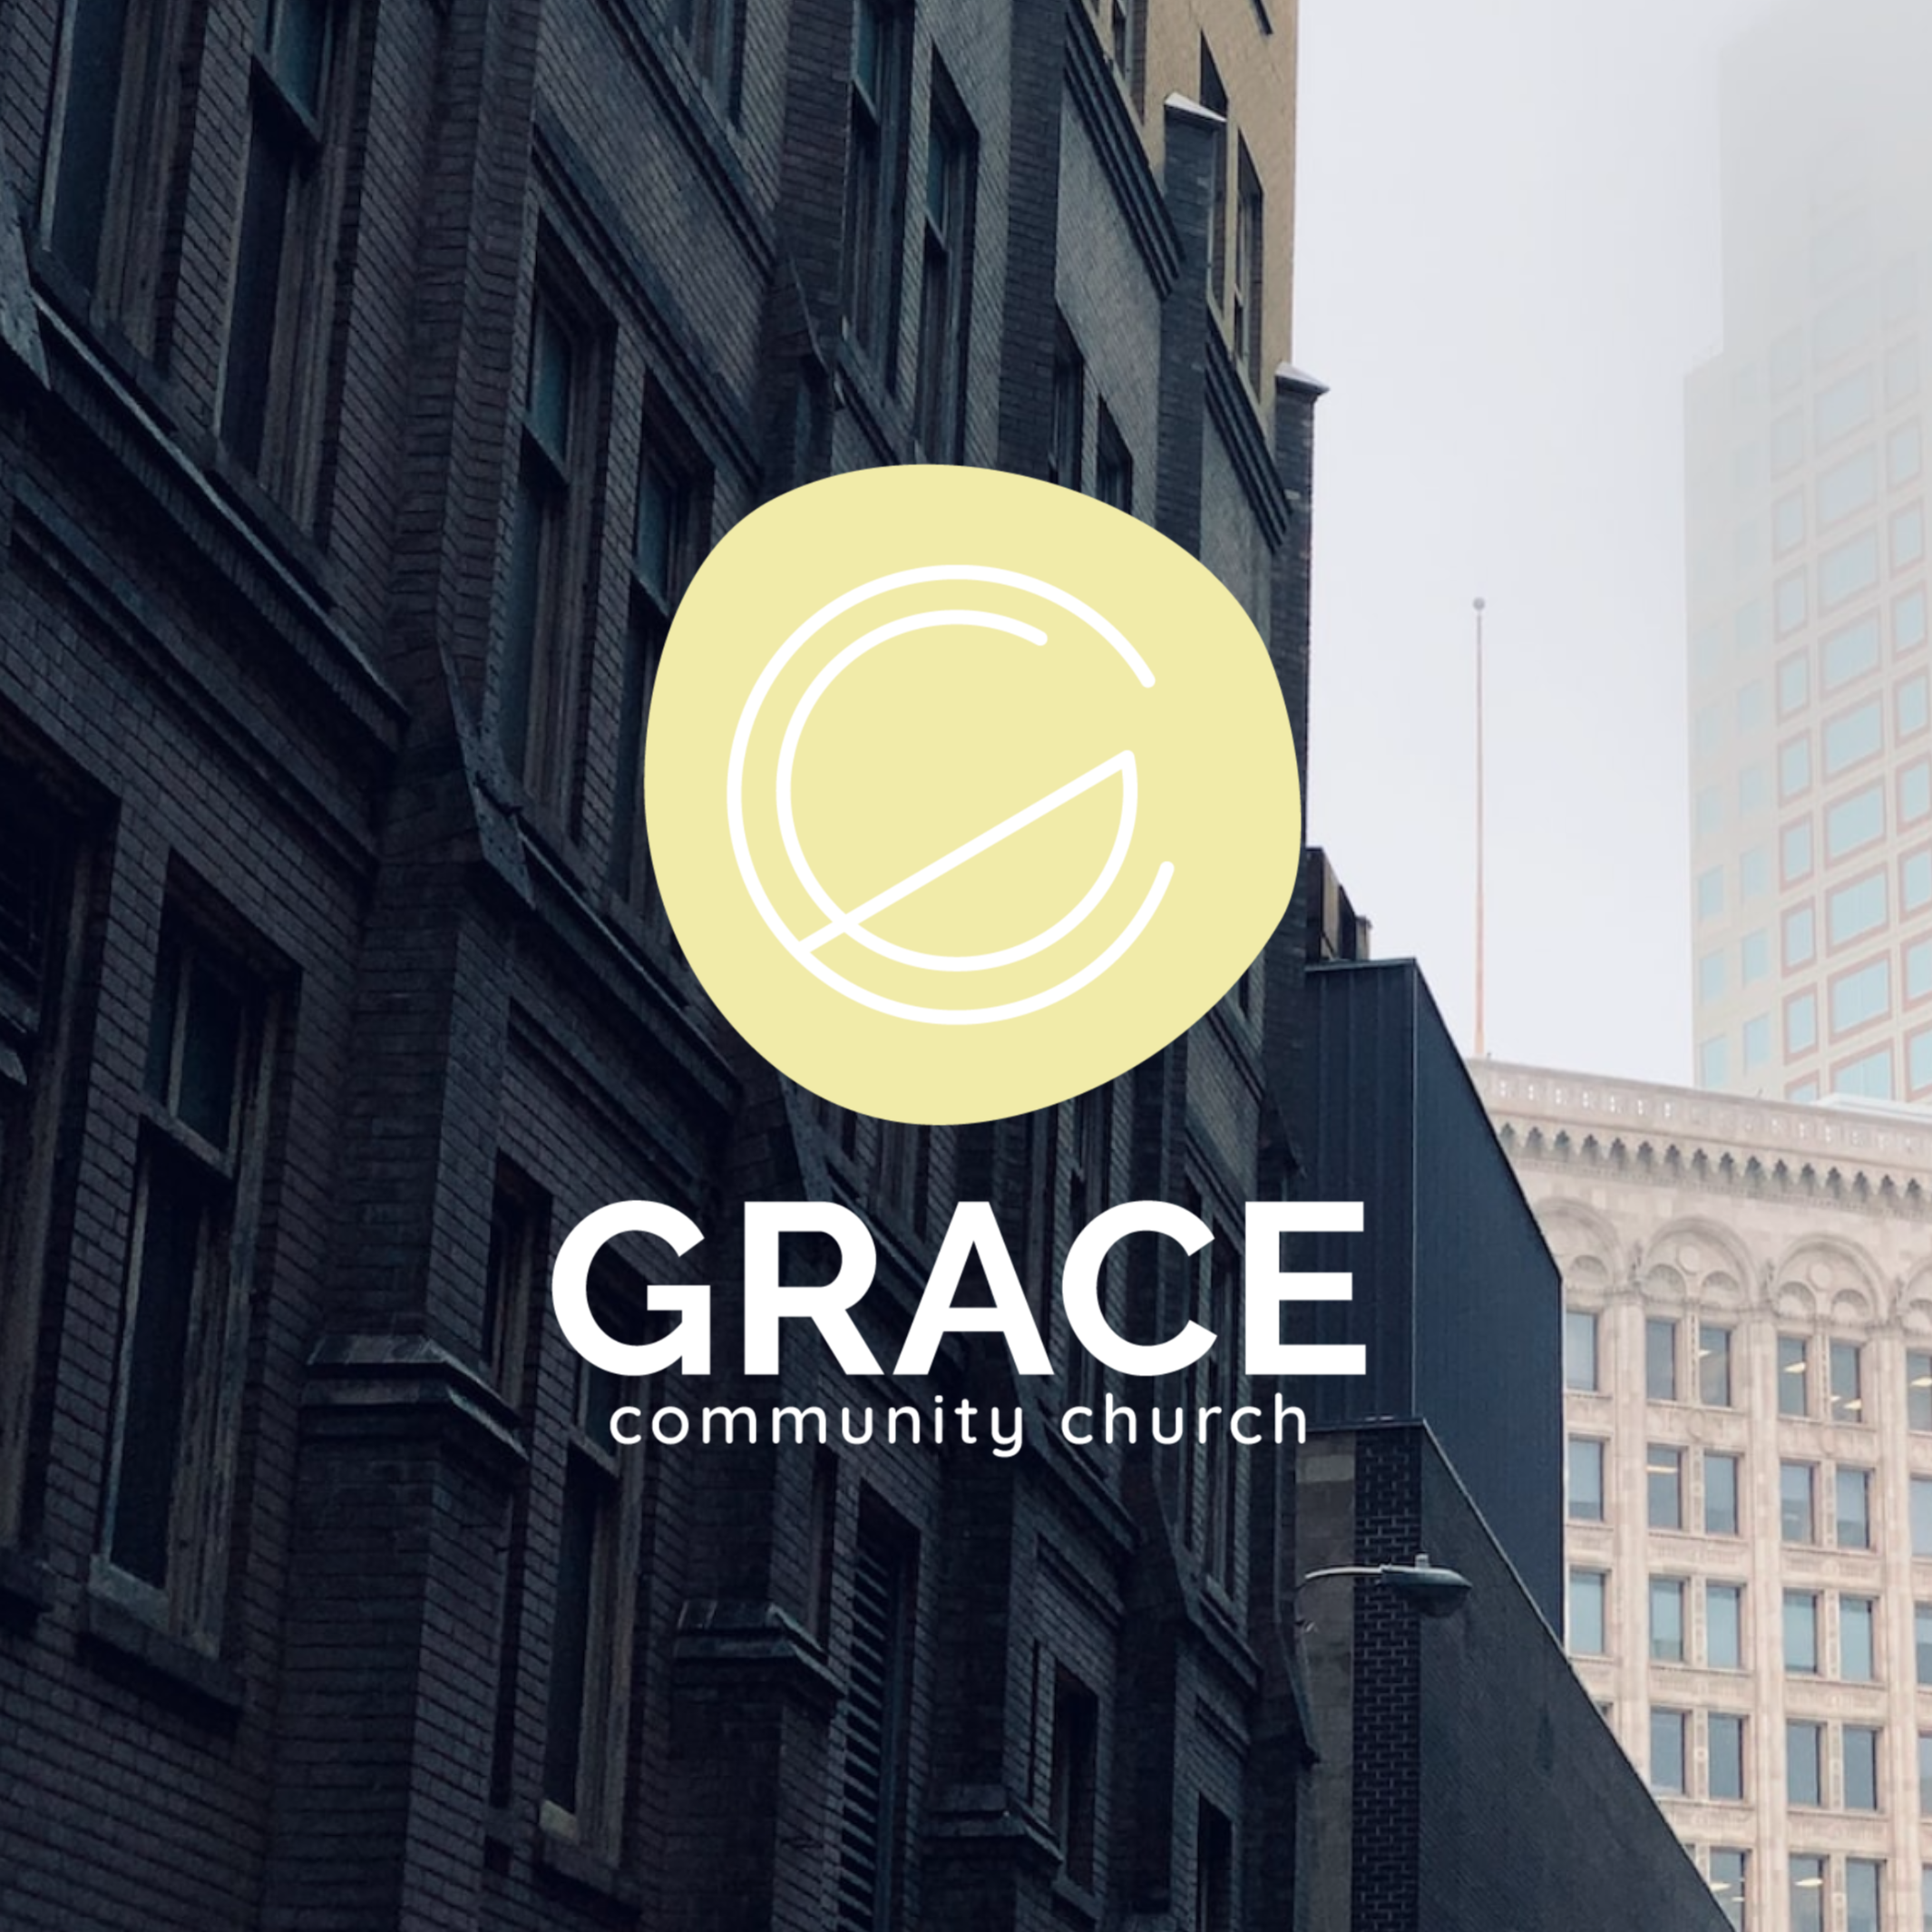 Grace Community Church logo feature